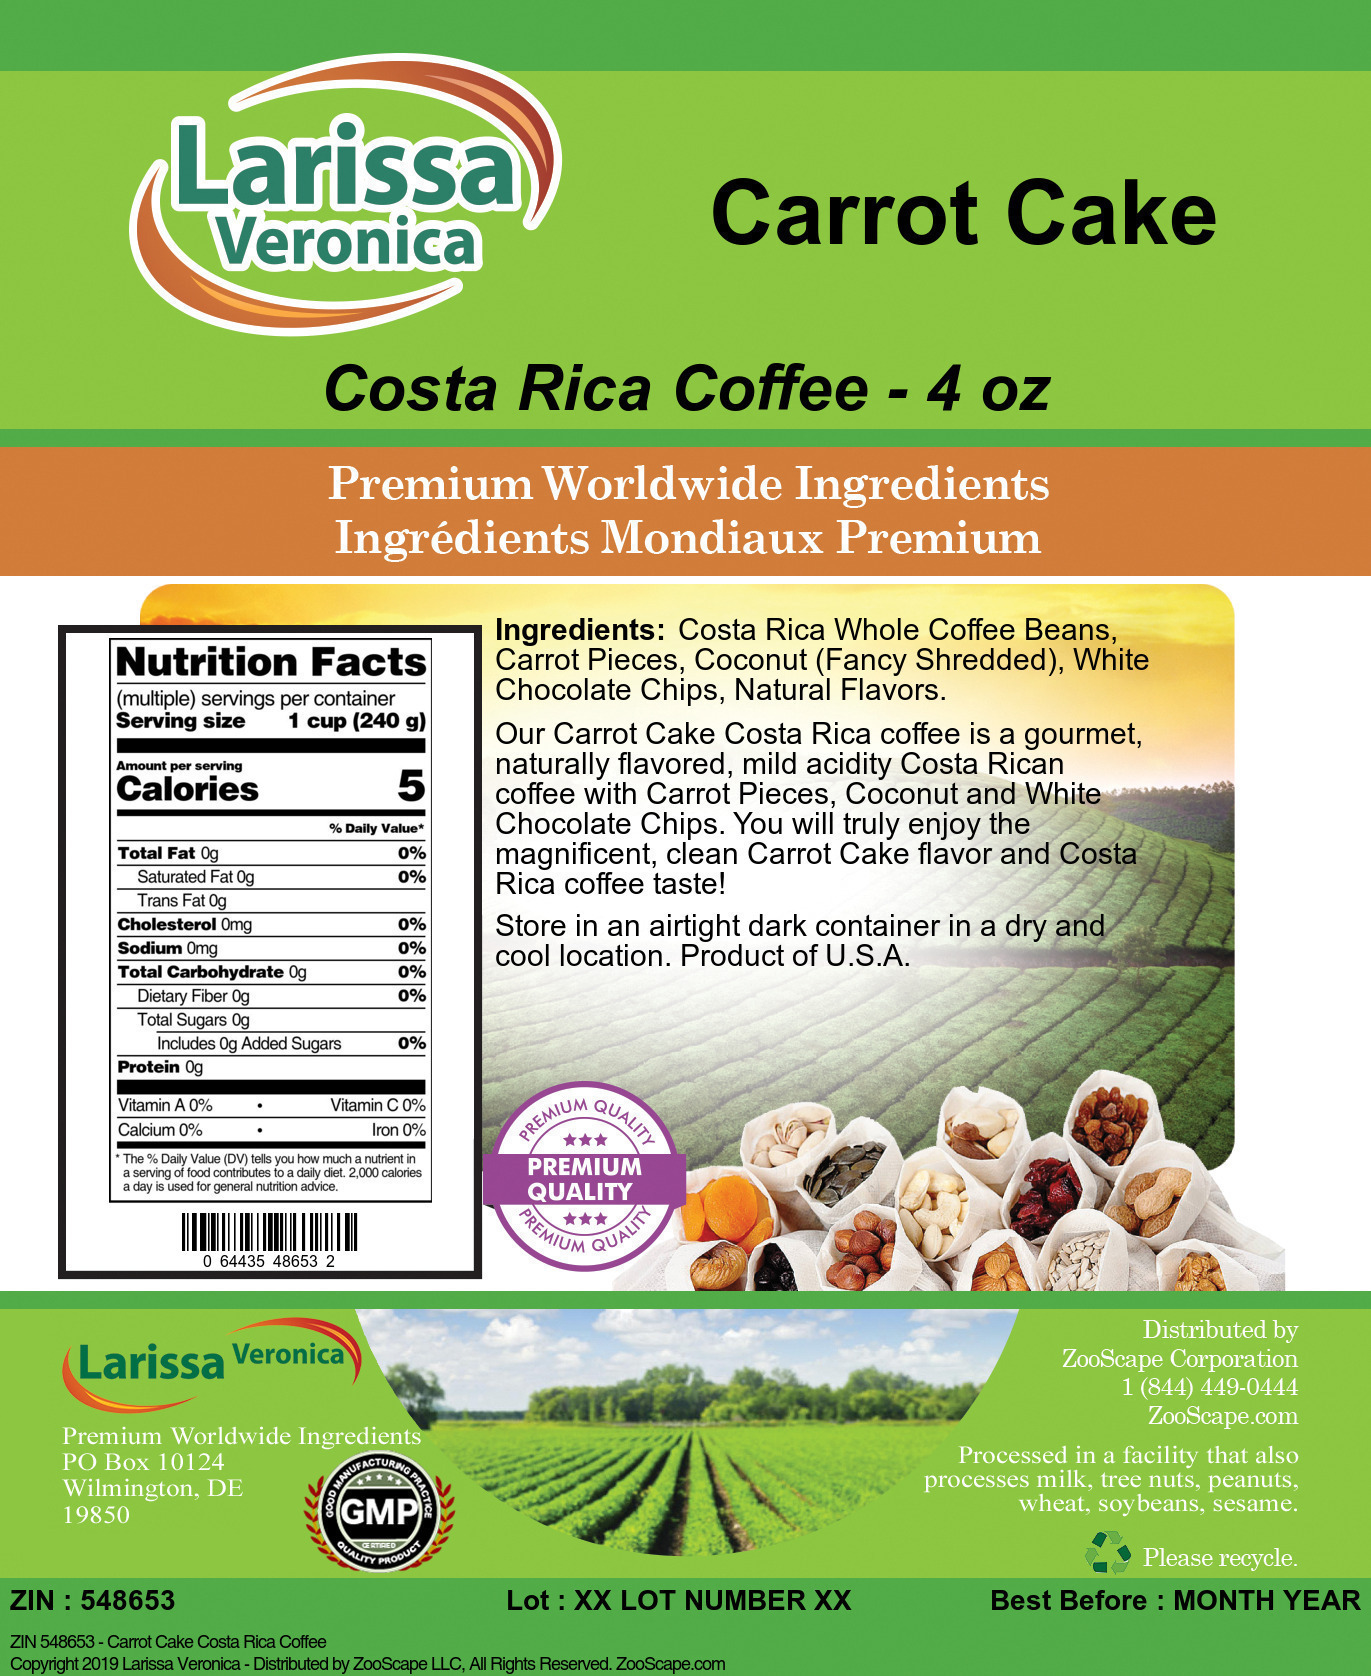 Carrot Cake Costa Rica Coffee - Label